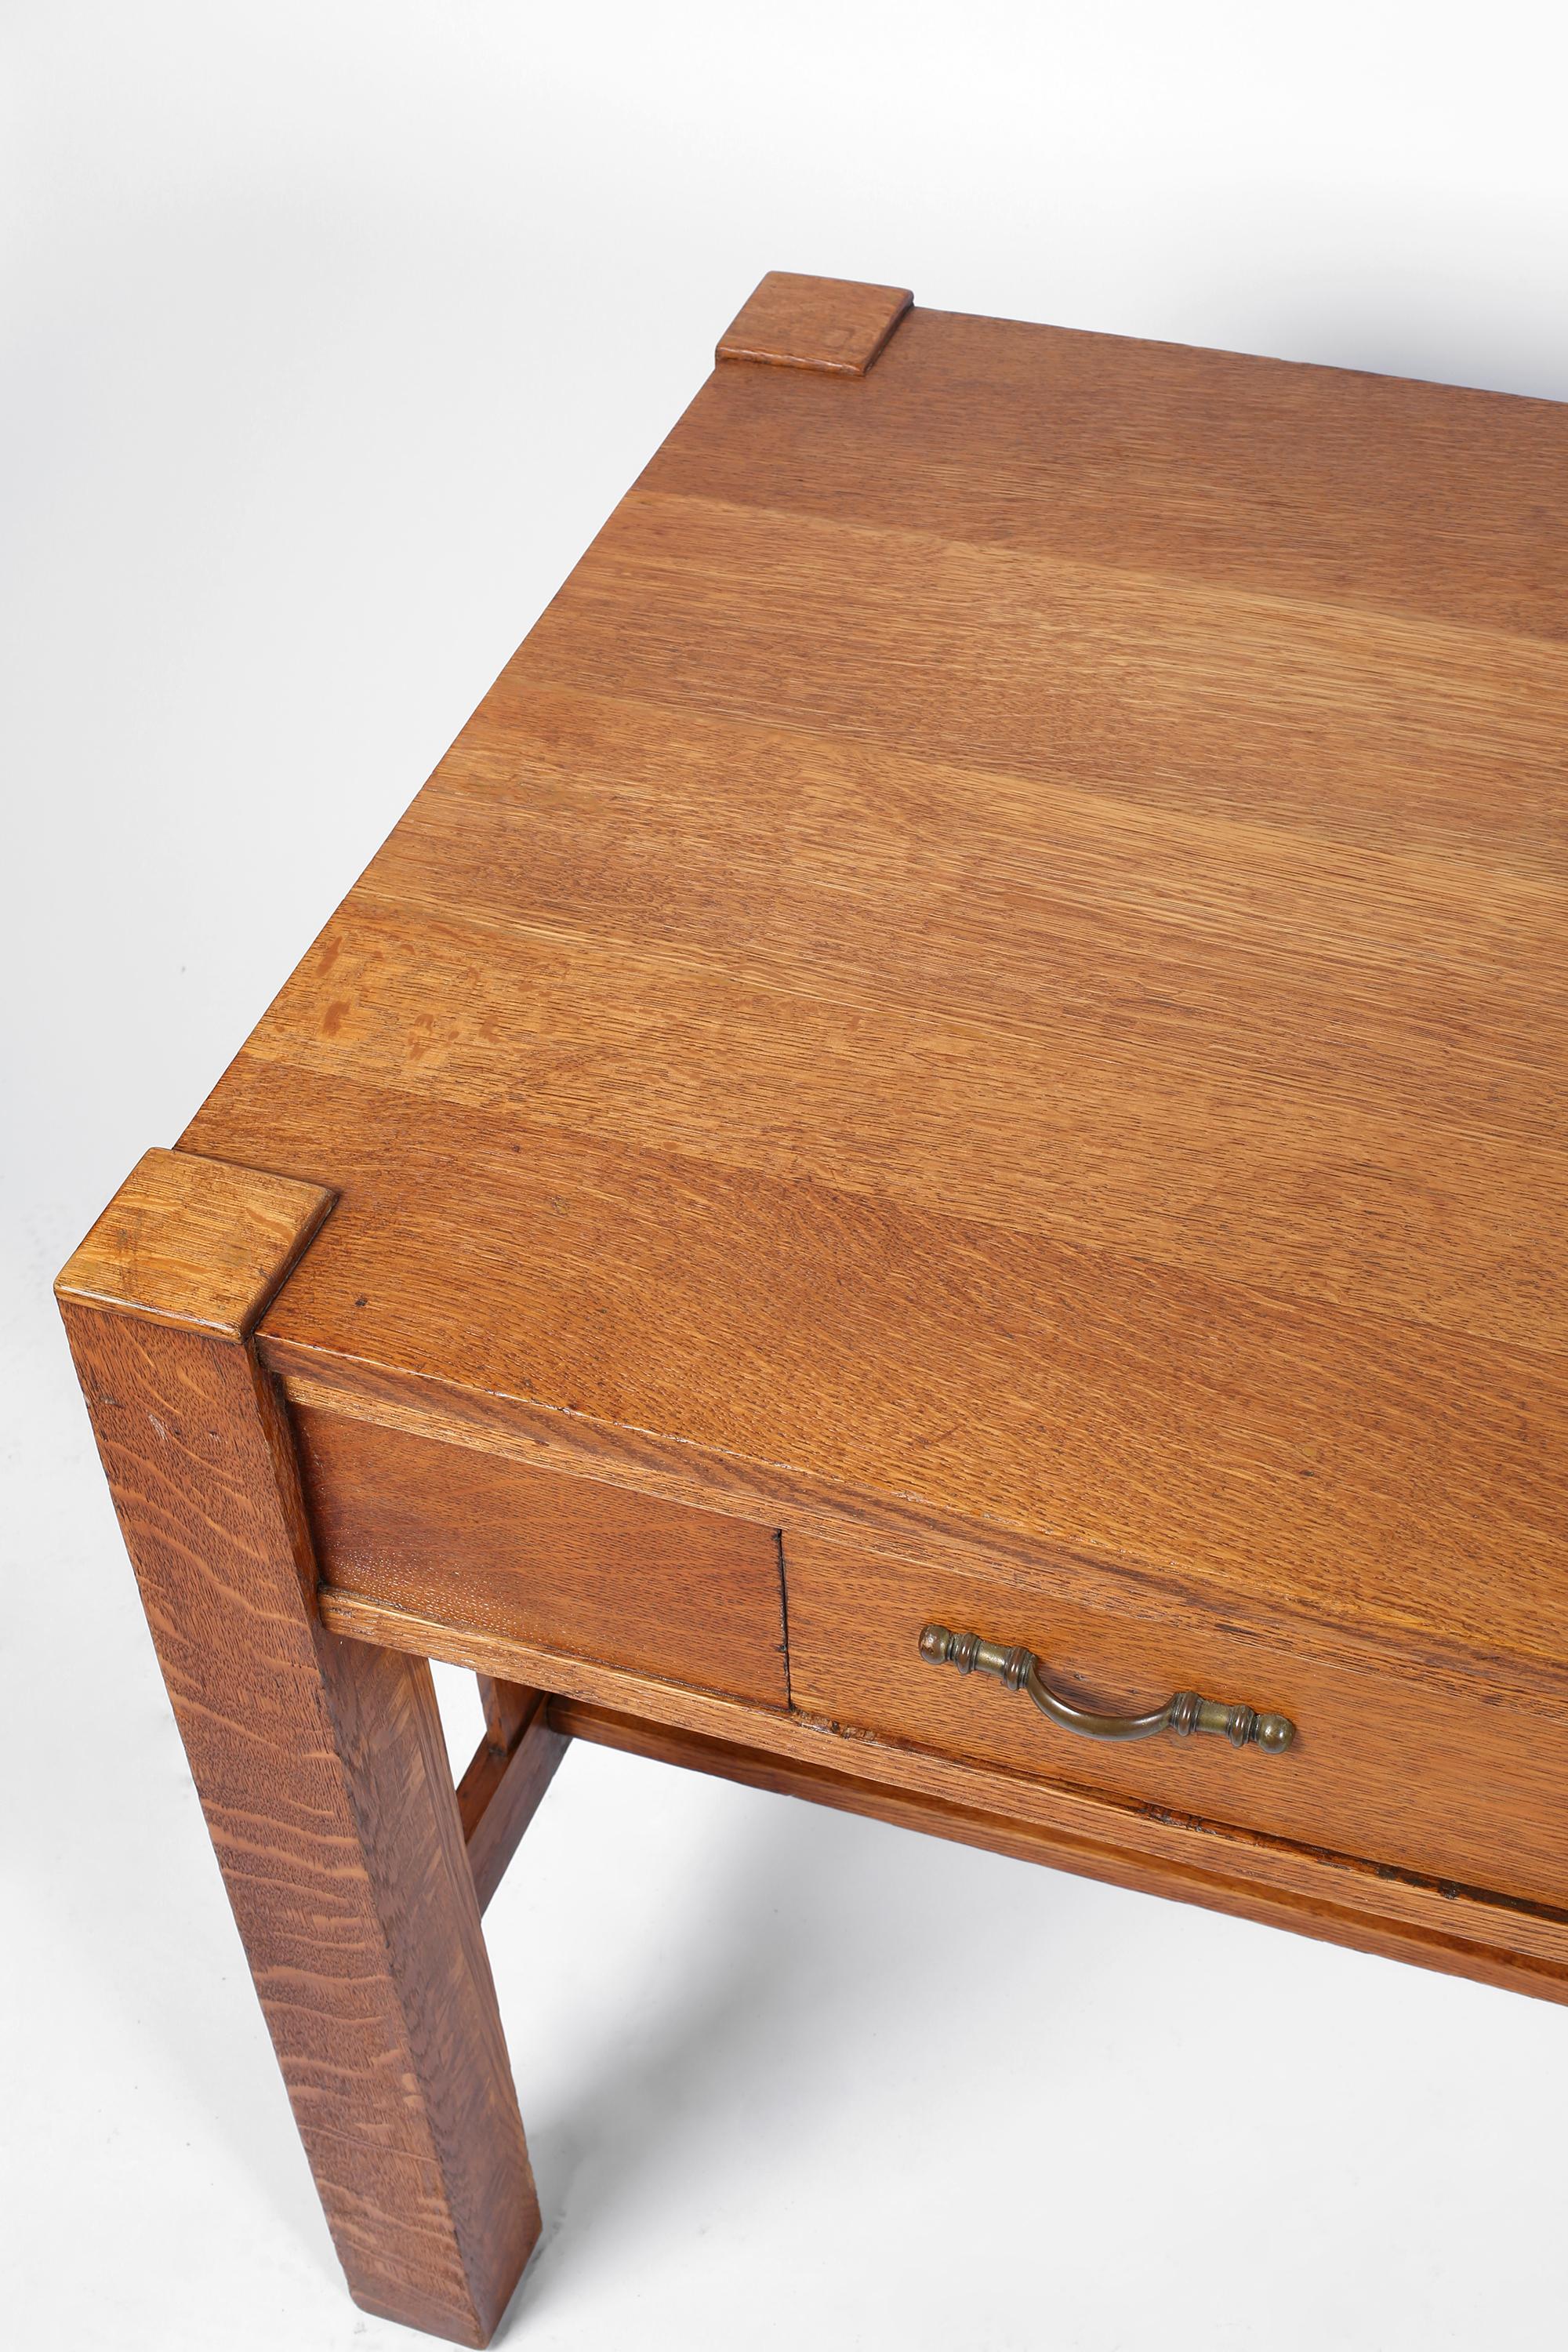 20th Century American Oak Arts & Crafts Desk circa 1900 in the Manner of Frank Lloyd Wright